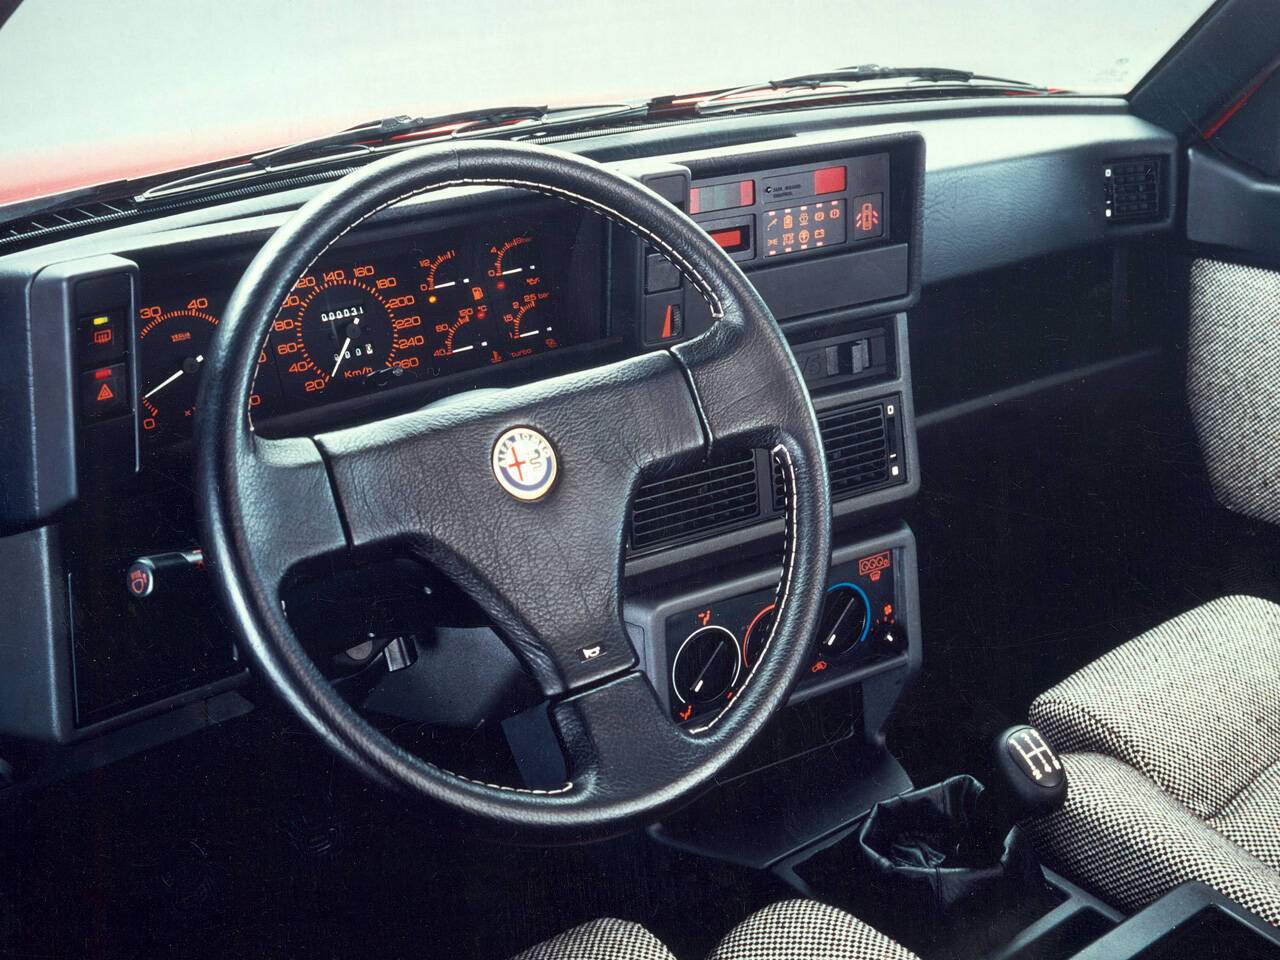 Alfa Romeo 75 1.8 Turbo Evoluzione (1987),  ajouté par fox58